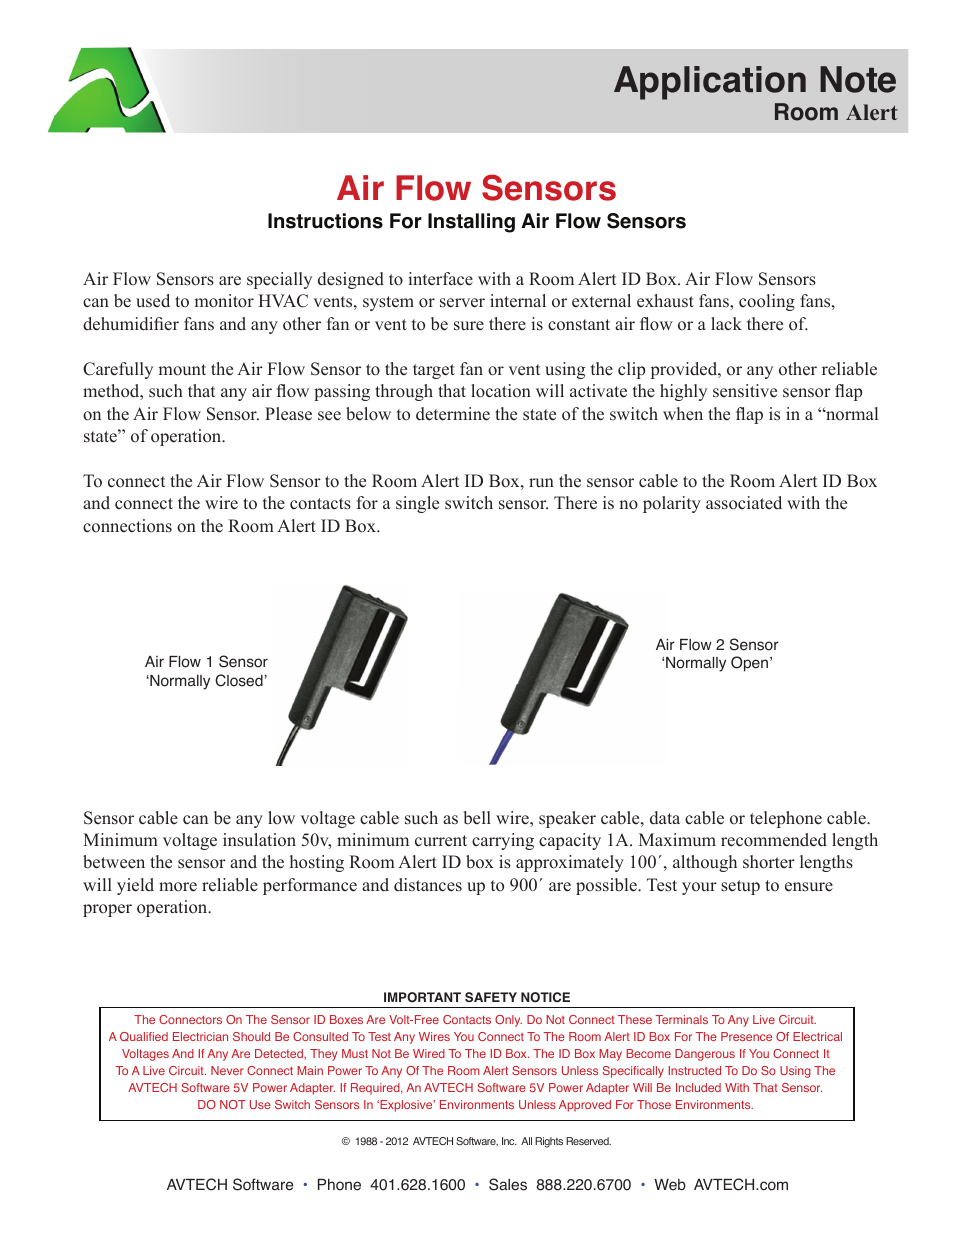 Air Flow 2 Sensor (RMA-AF2-SEN)